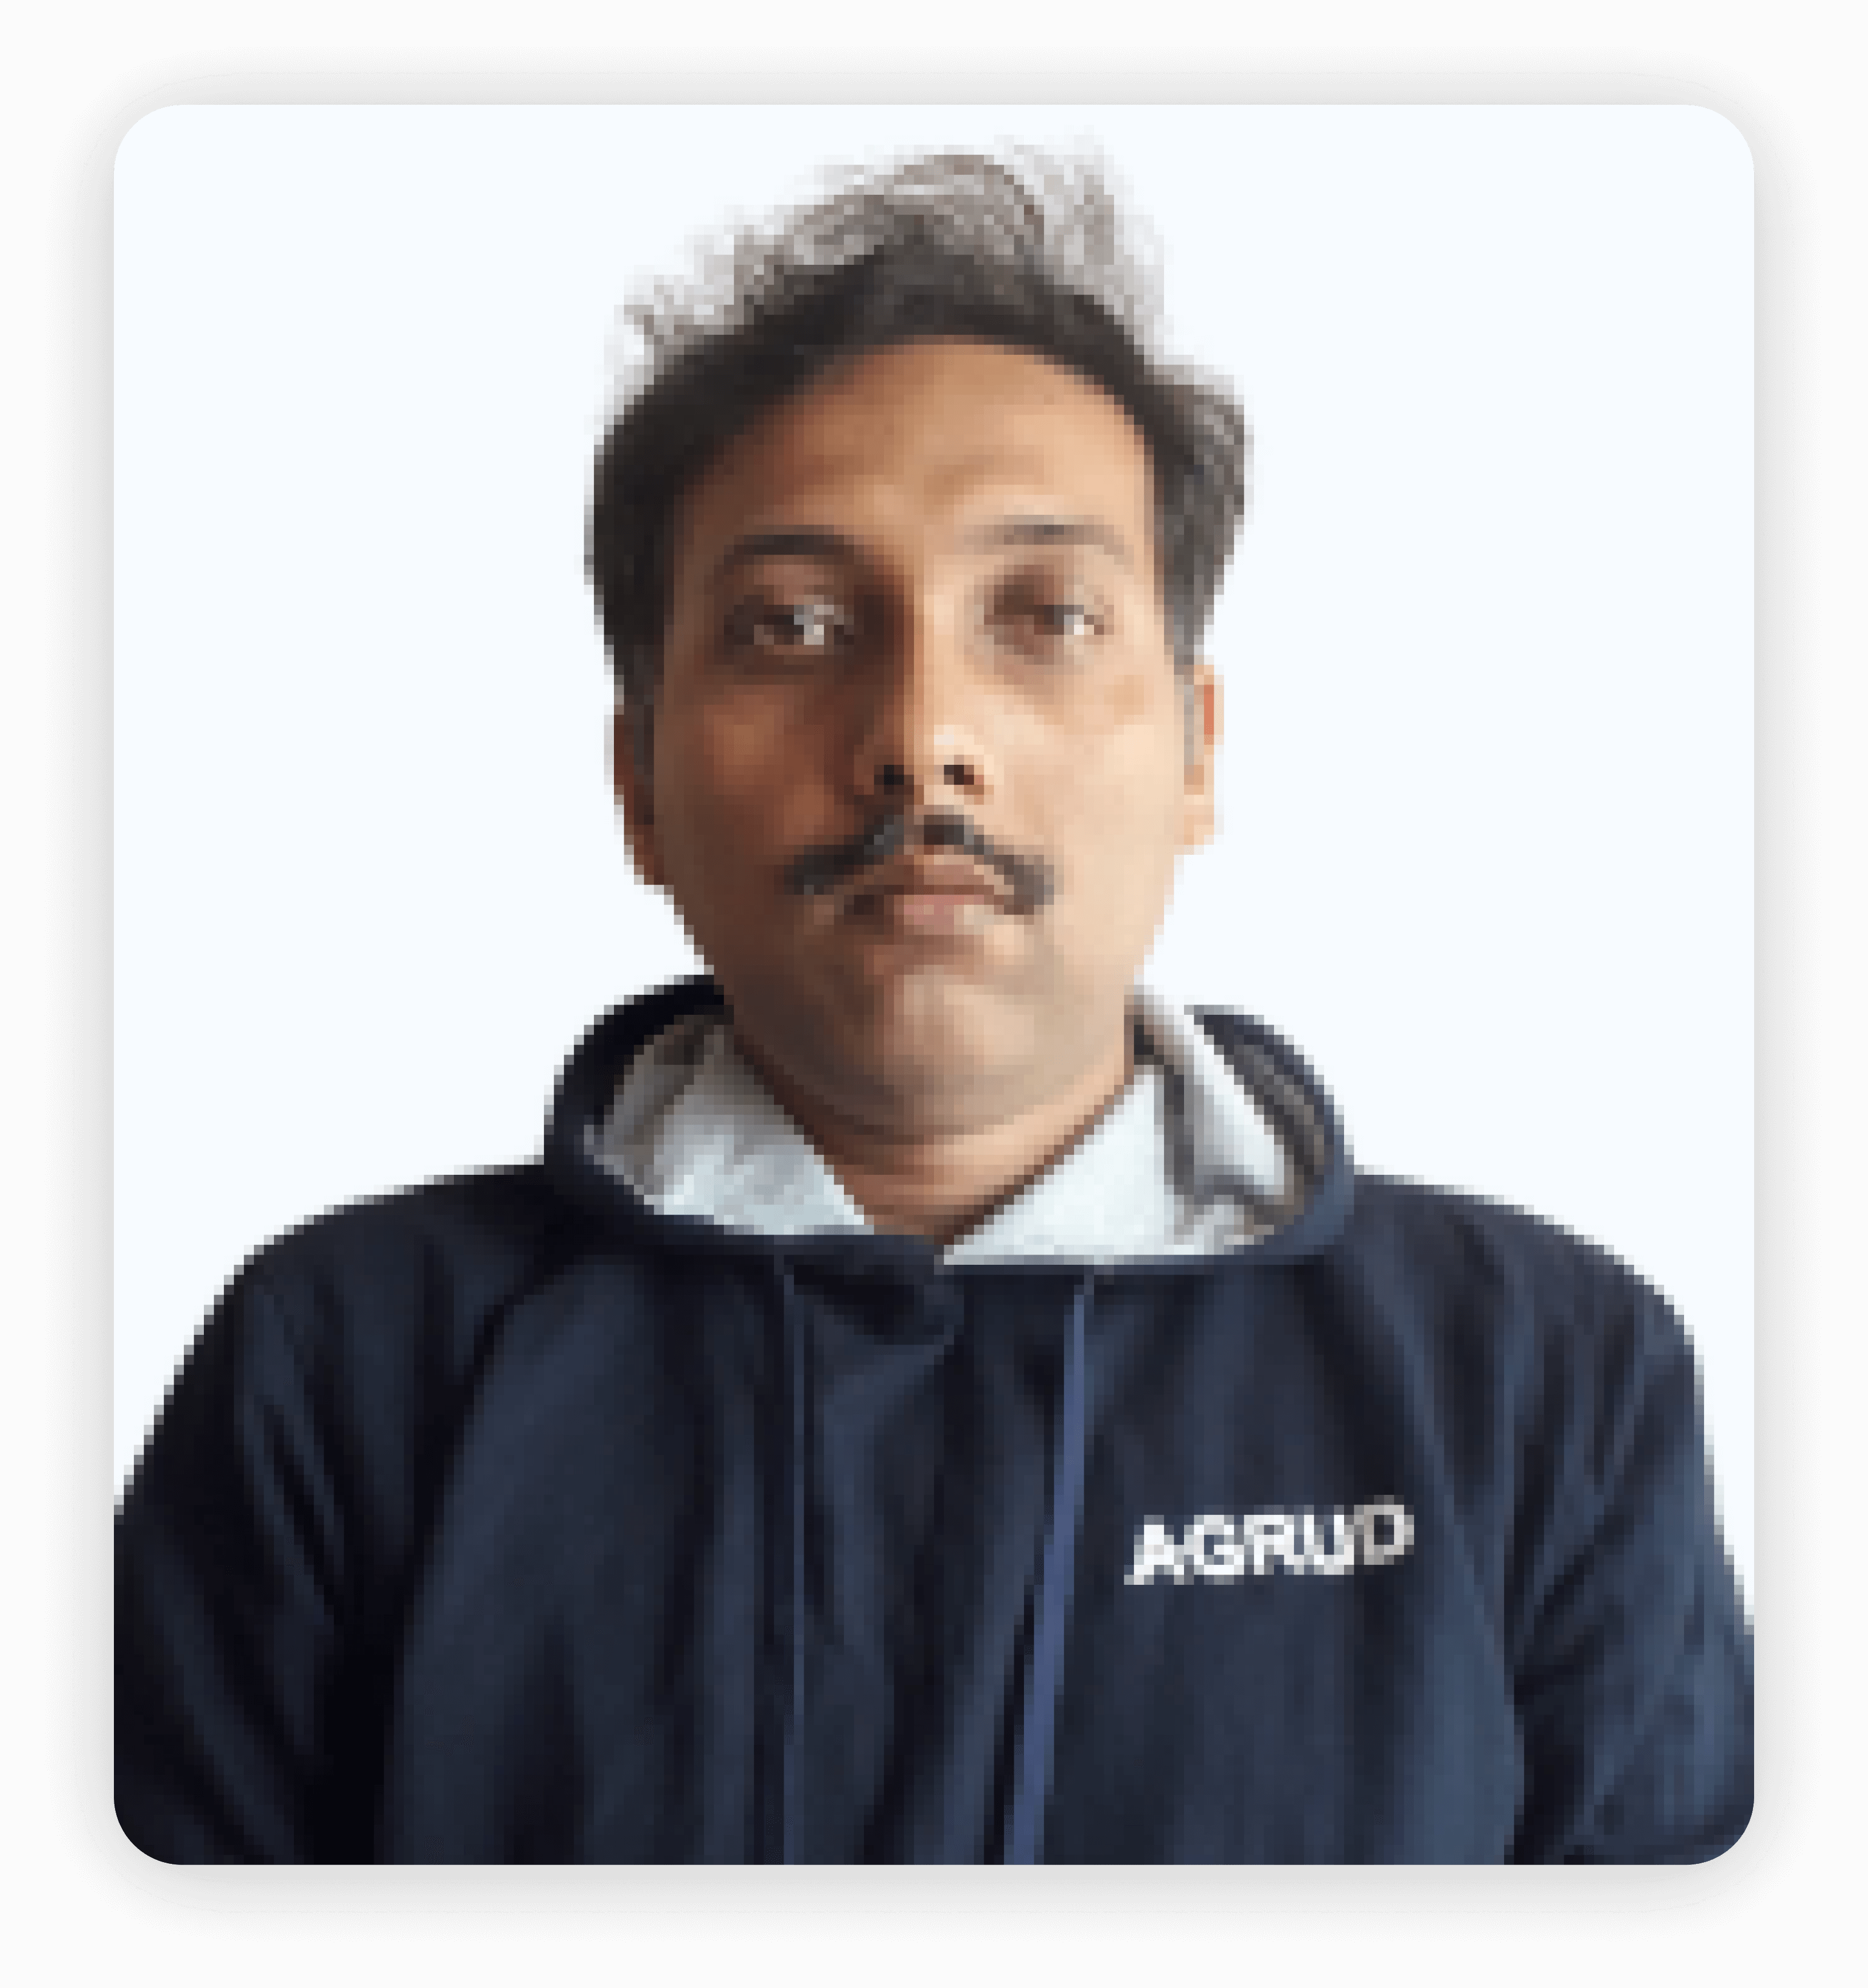 Subhamoy Guha - Senior Manager (Engg) at Agrud Technologies